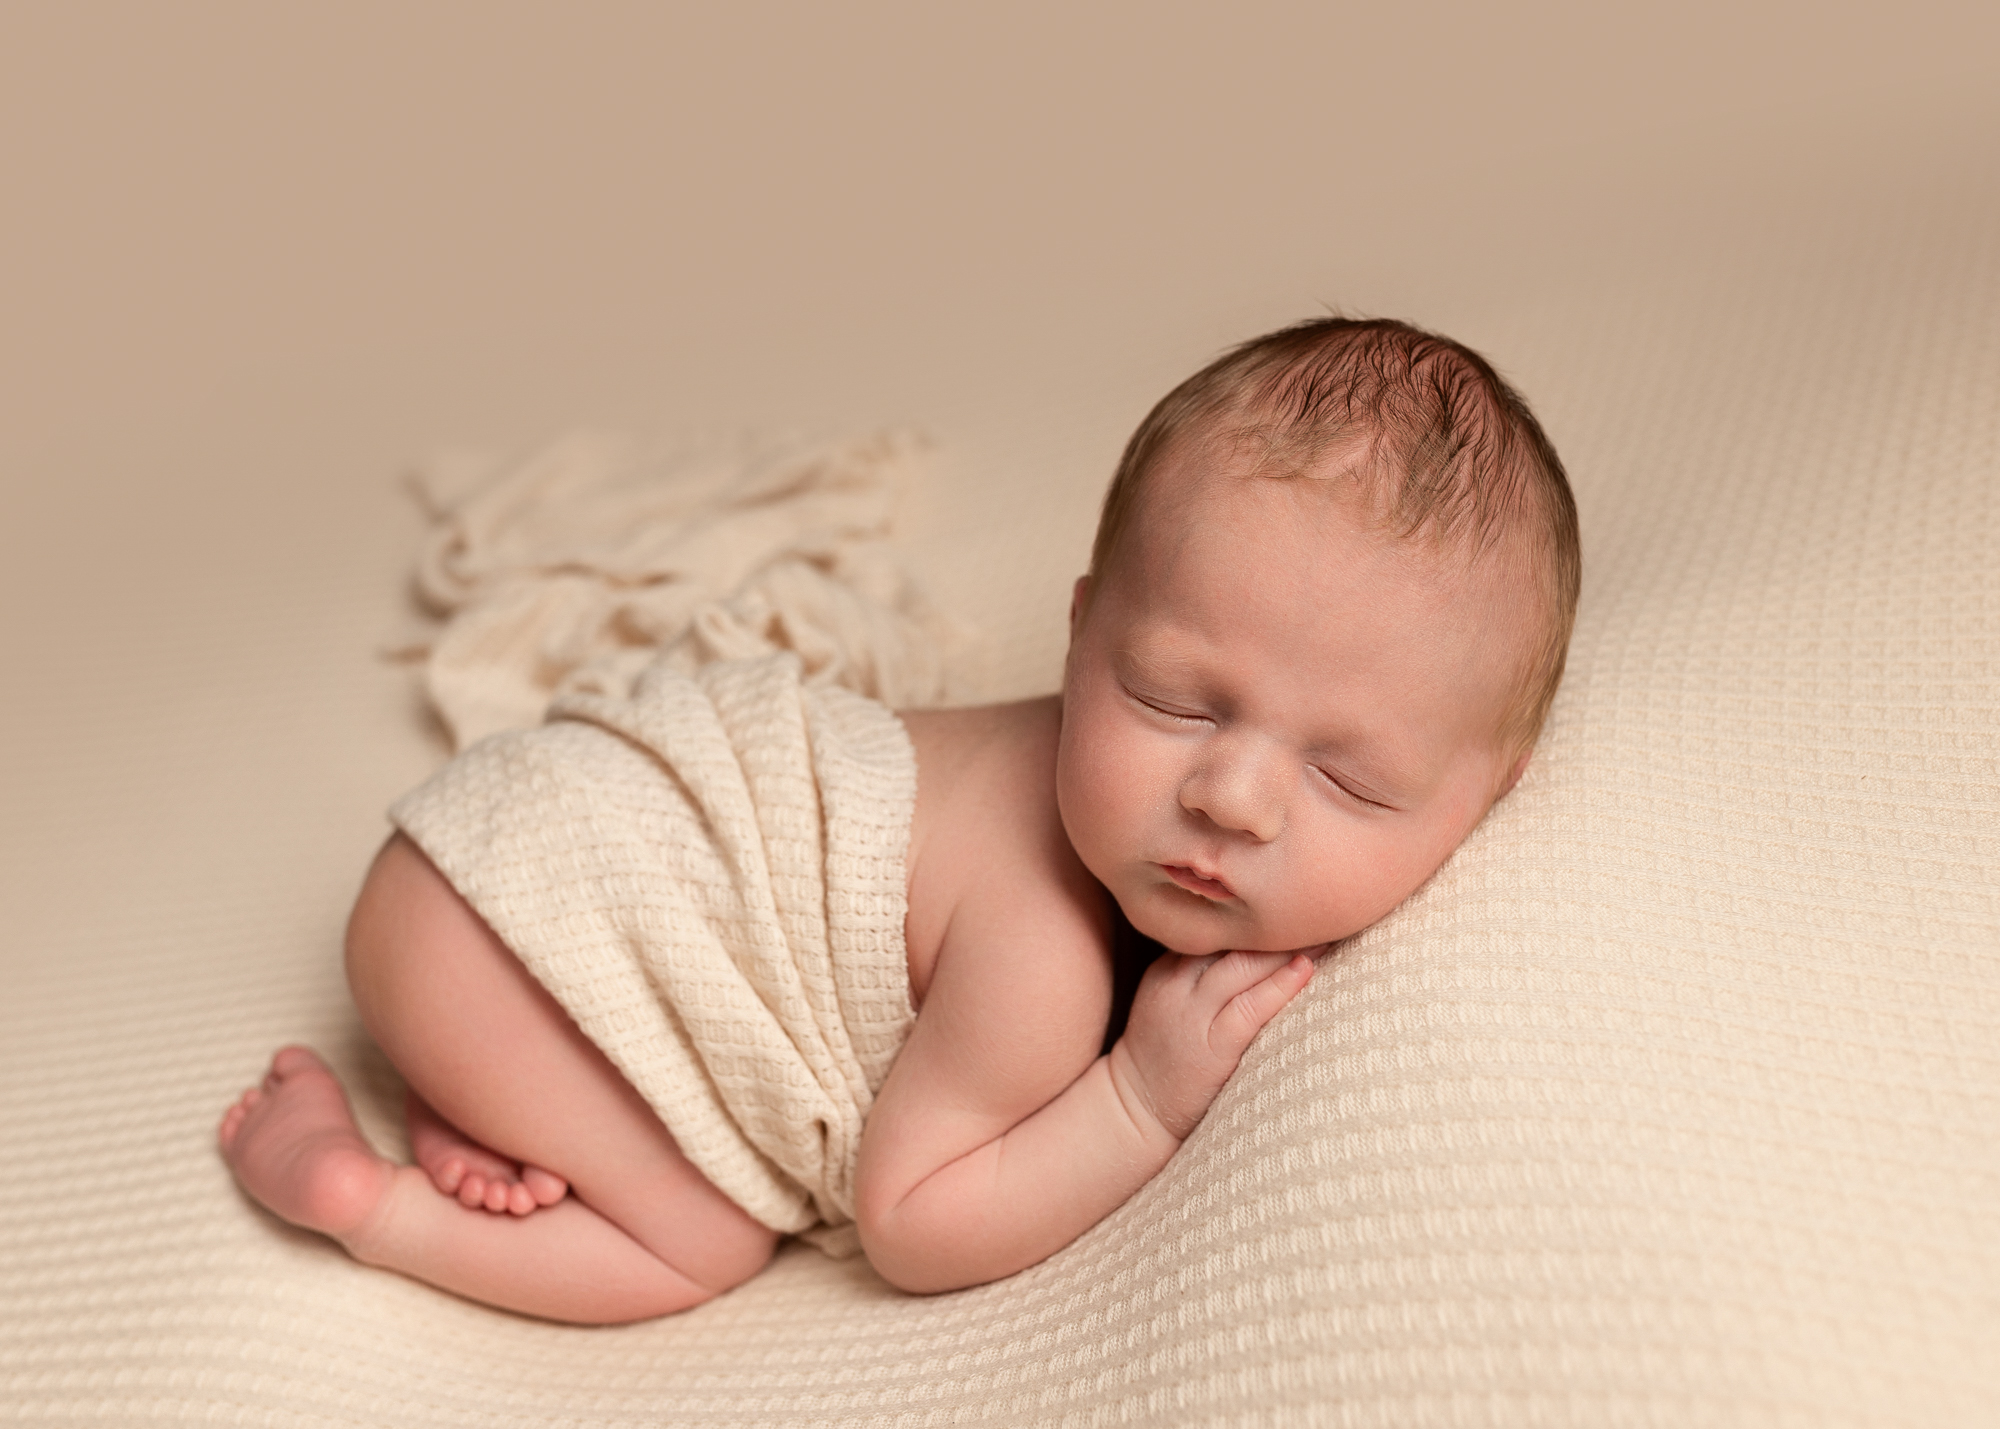 newborn baby curled up asleep on cream blanket during a newborn photoshoot in Kent